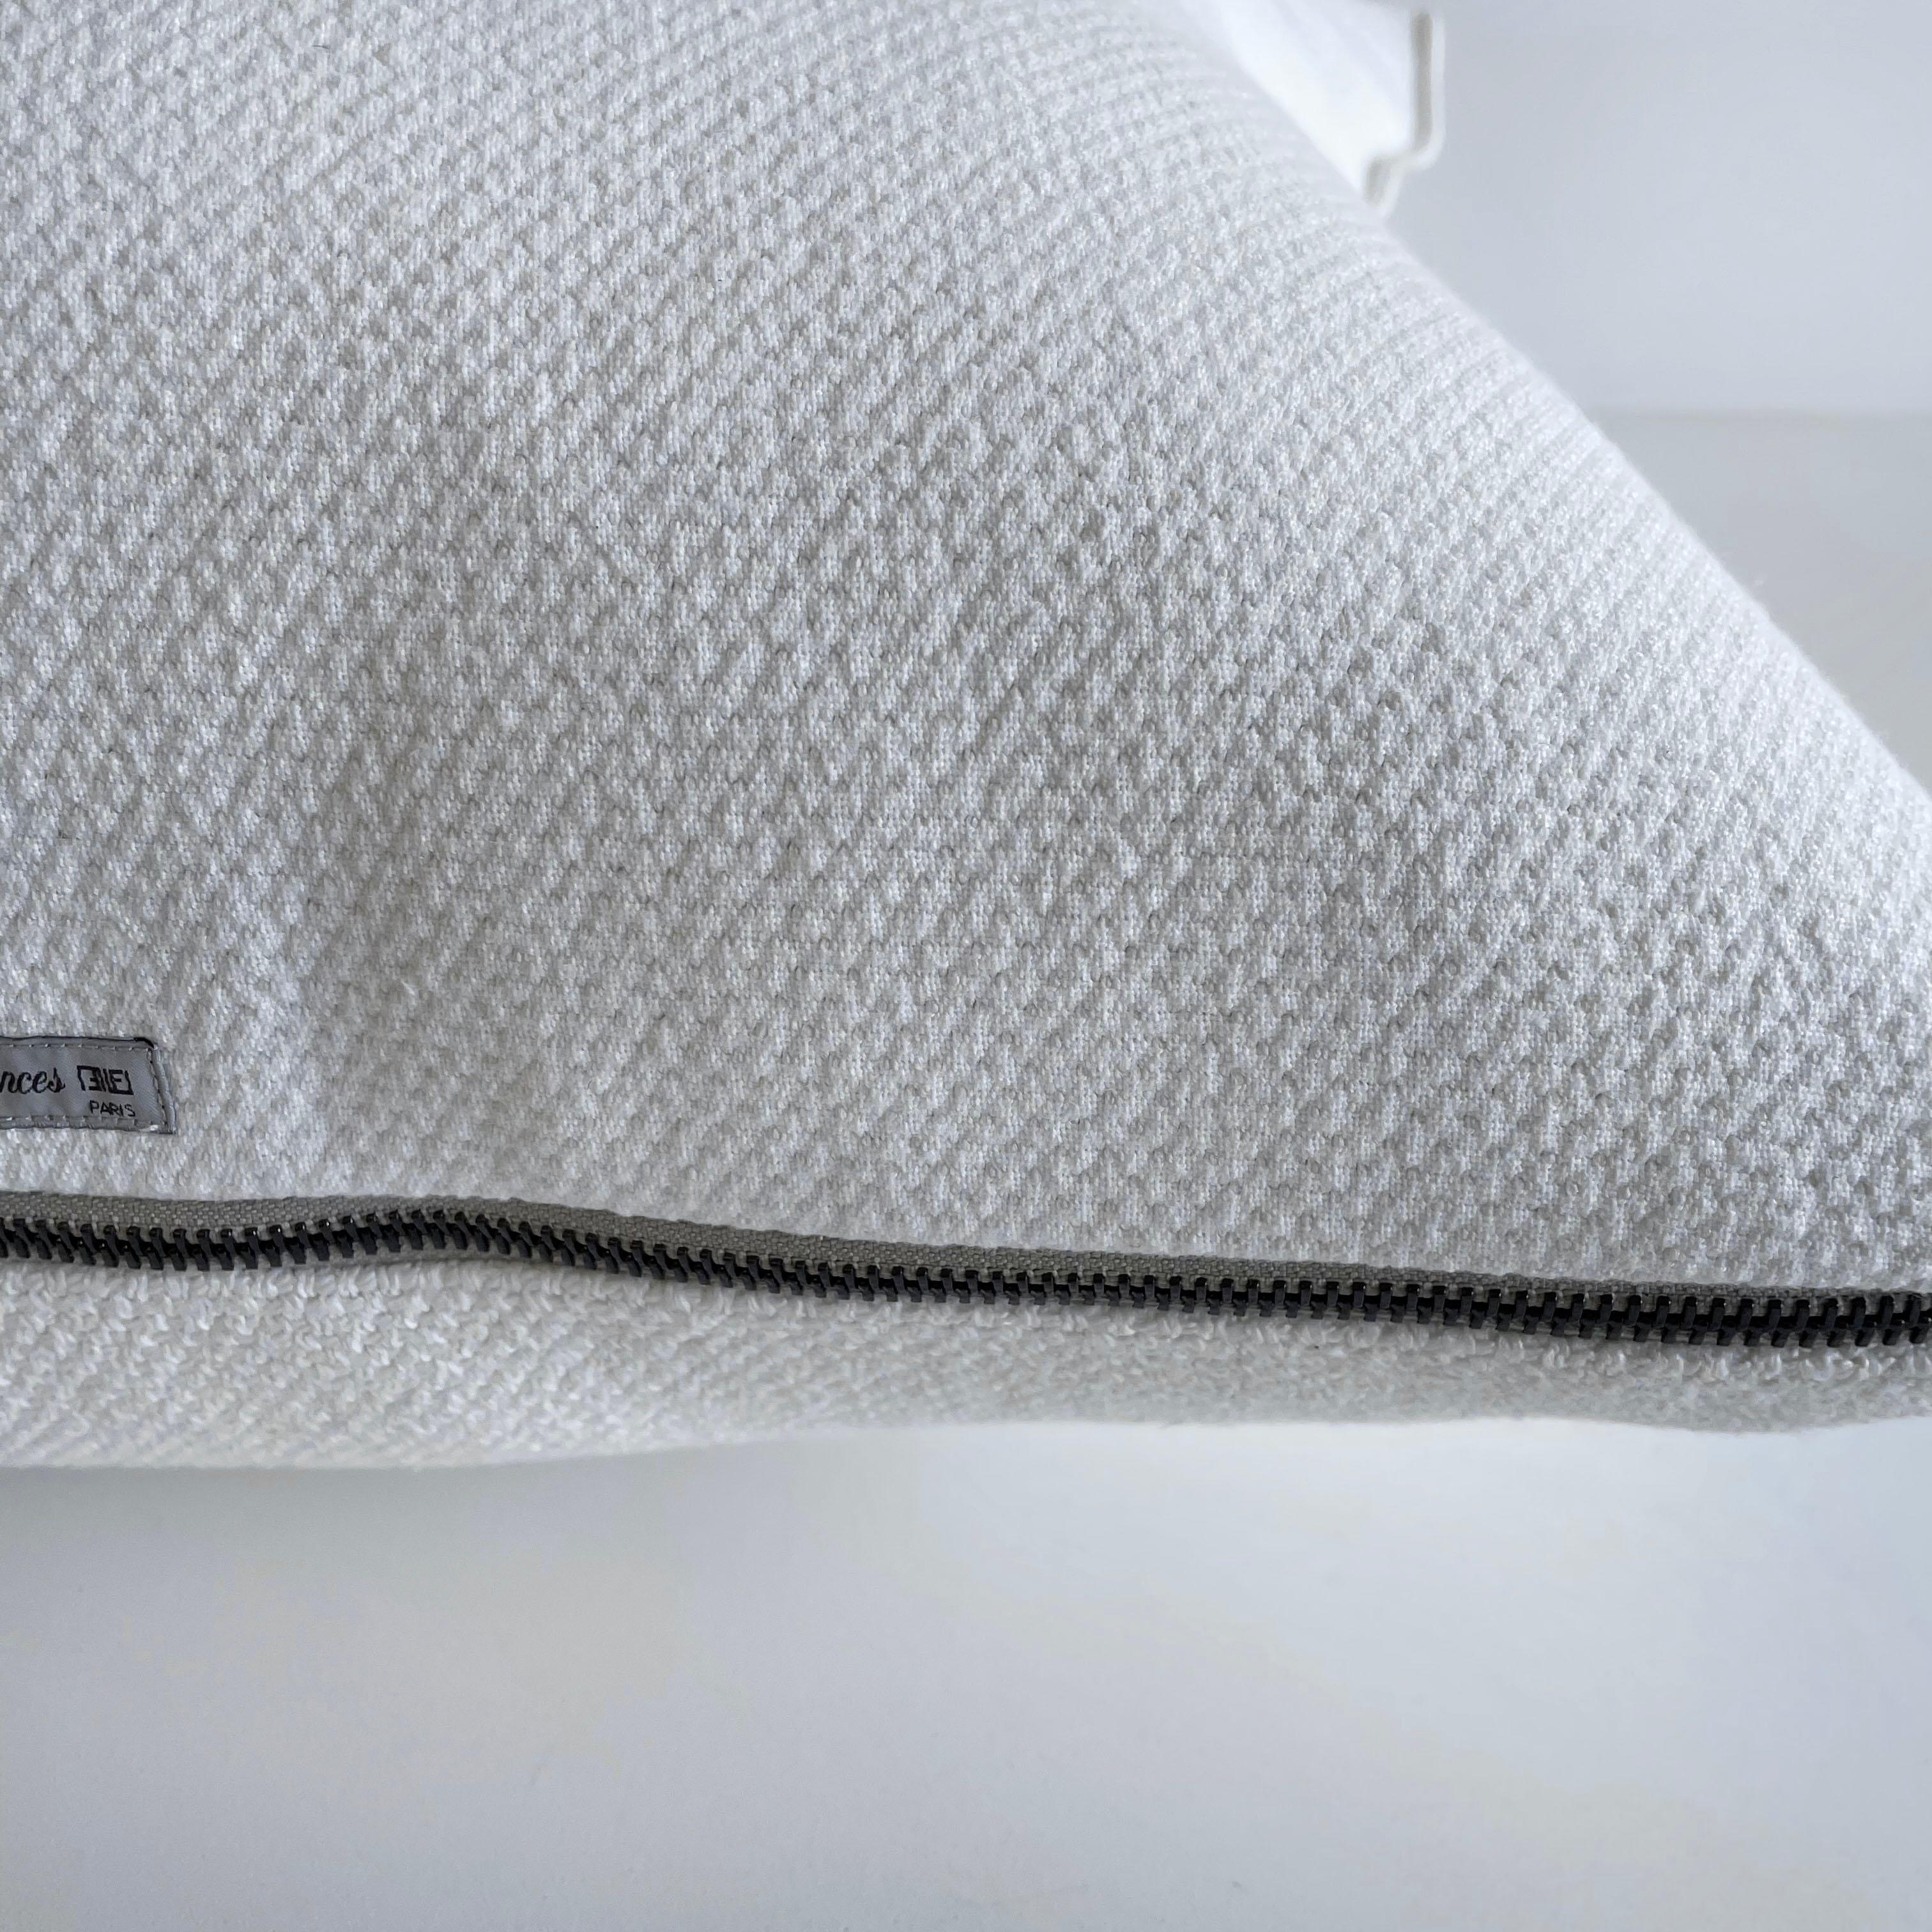 French linen white accent pillow. Metal zipper closure. Content: 50% linen, 24% cotton, 15% bamboo, 11% nylon. Includes insert. 
Size: 20